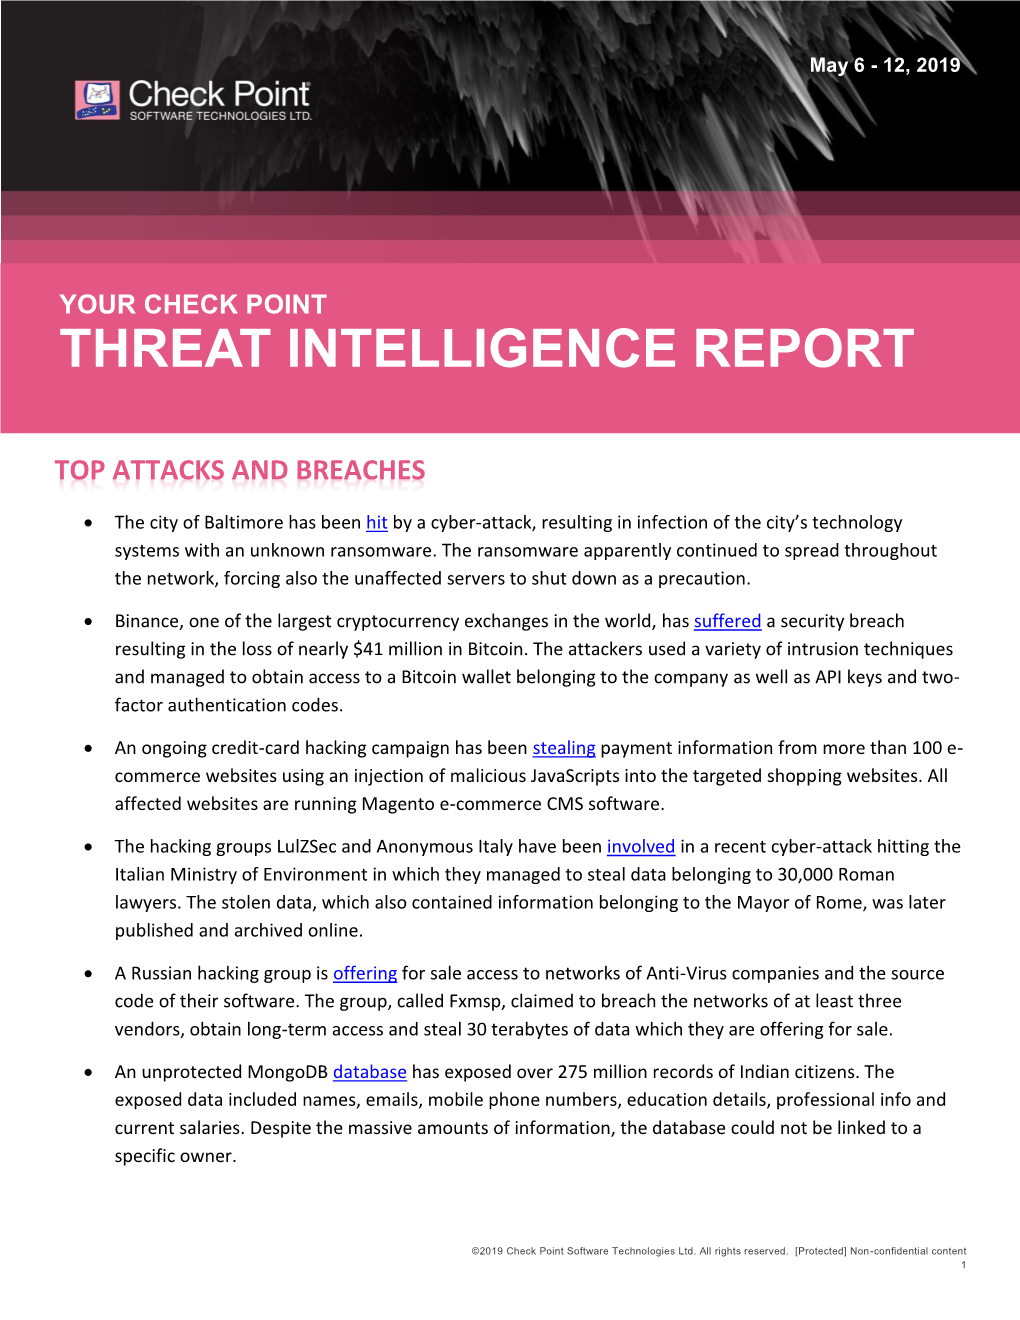 Check Point Threat Intelligence Bulletin